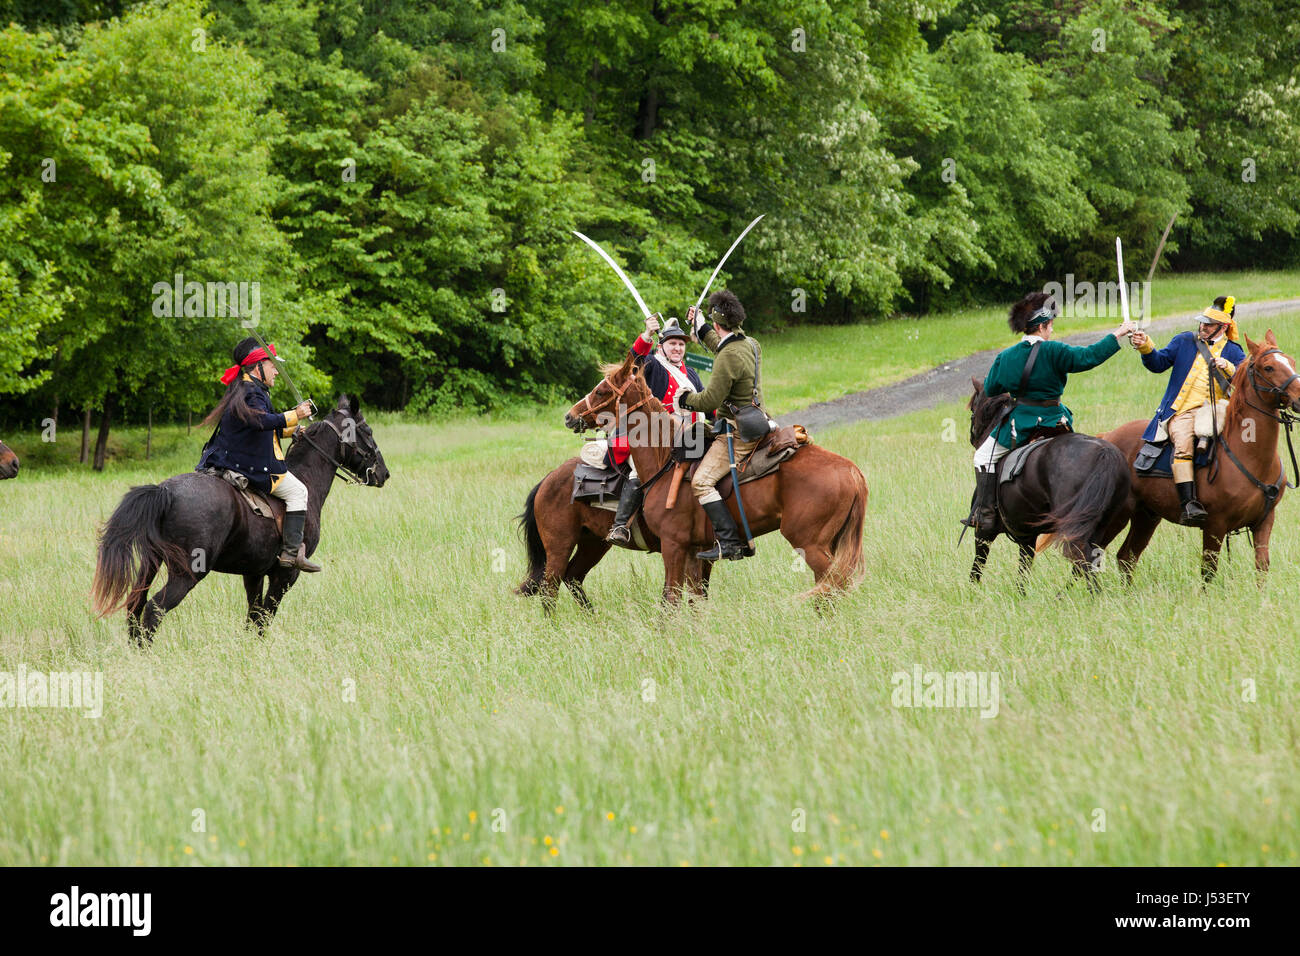 Revolutionary War re-enactors on horseback - USA Stock Photo